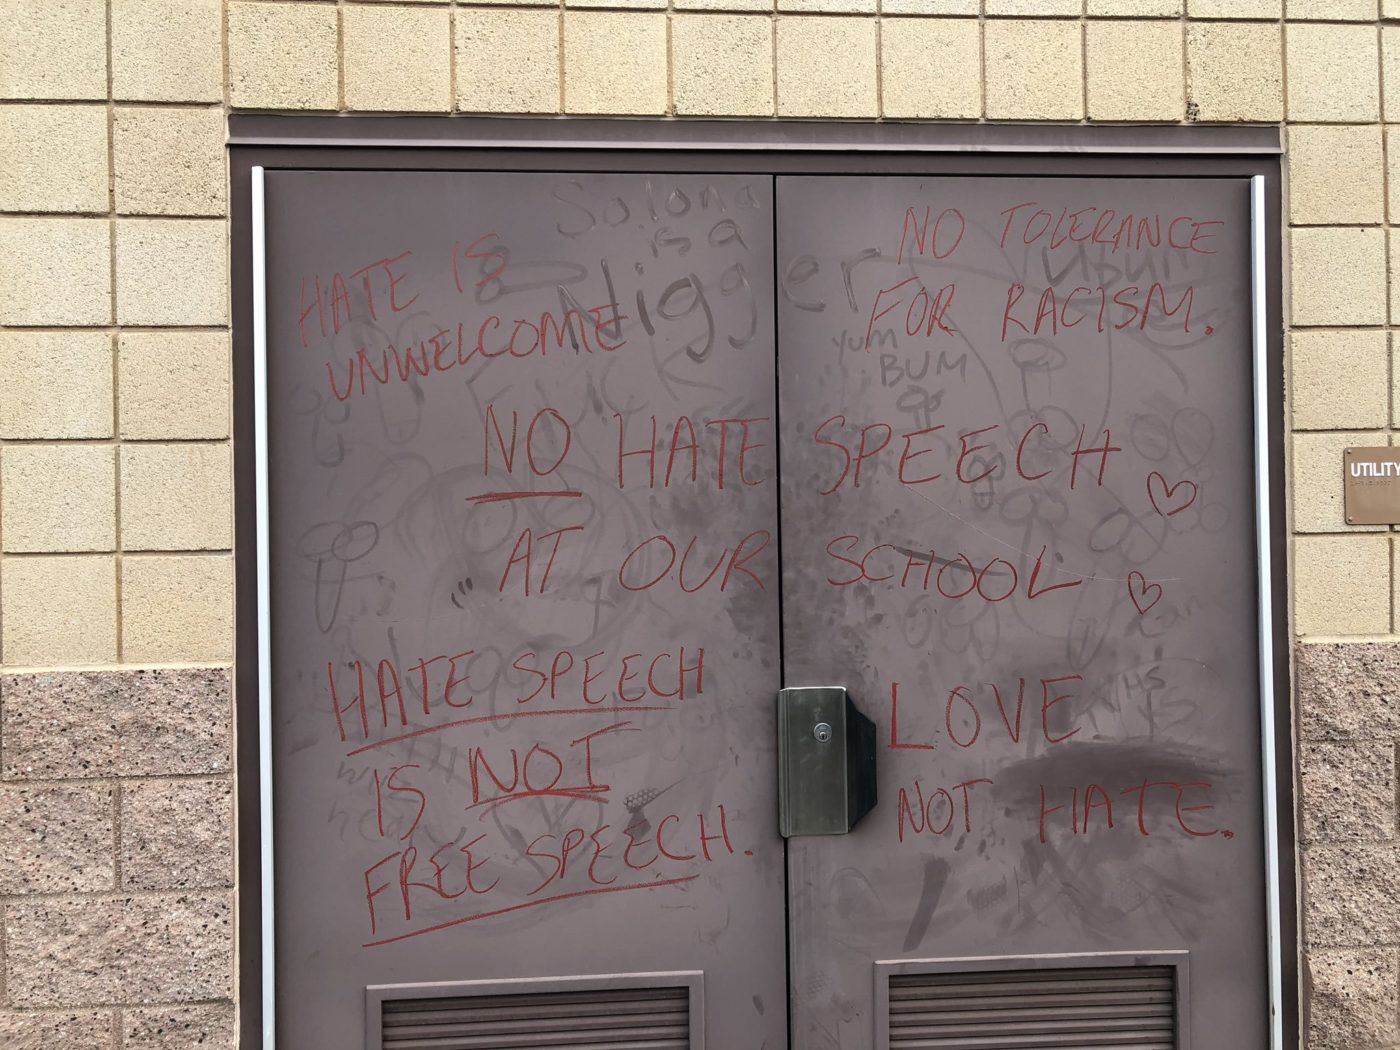 Temecula Valley High School Racist Graffiti Targets Black Students